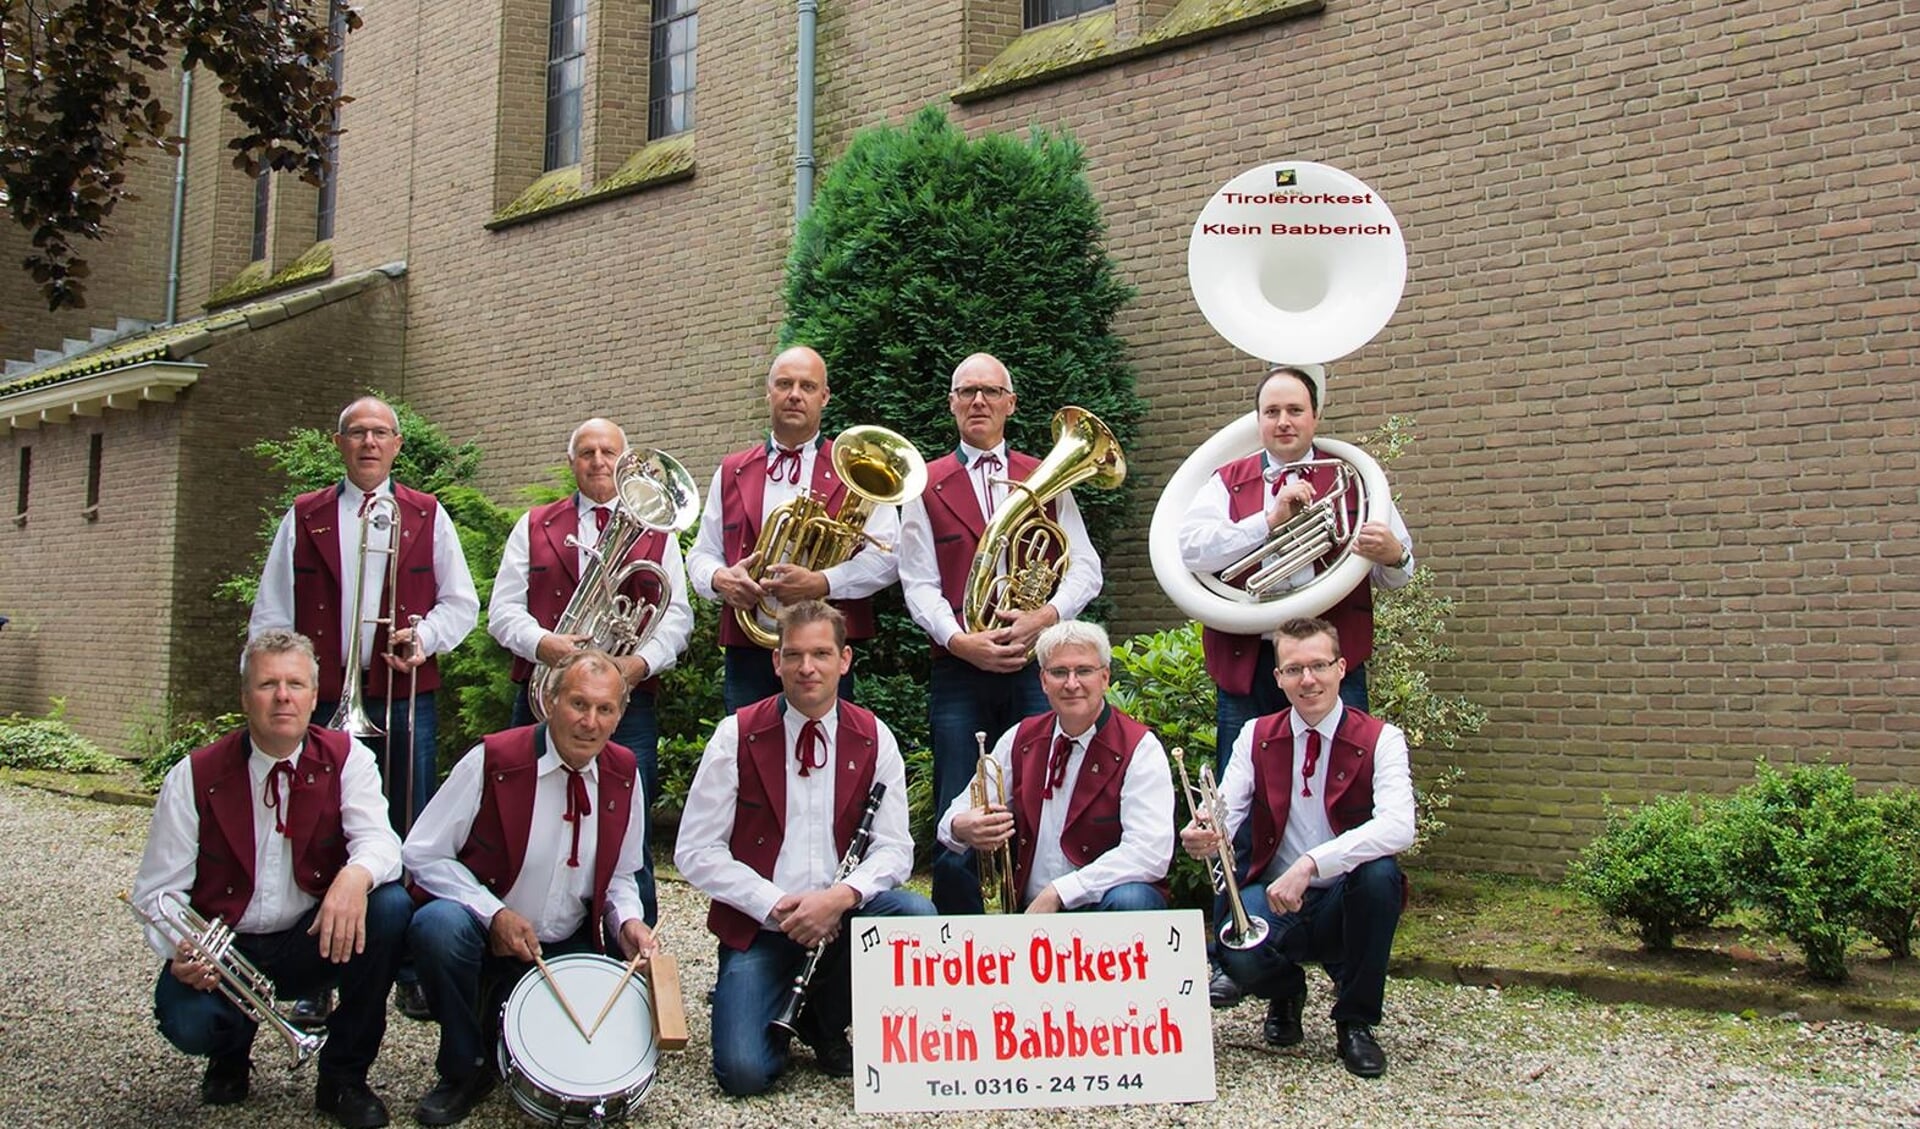 Tiroler Orkest Klein Babberich